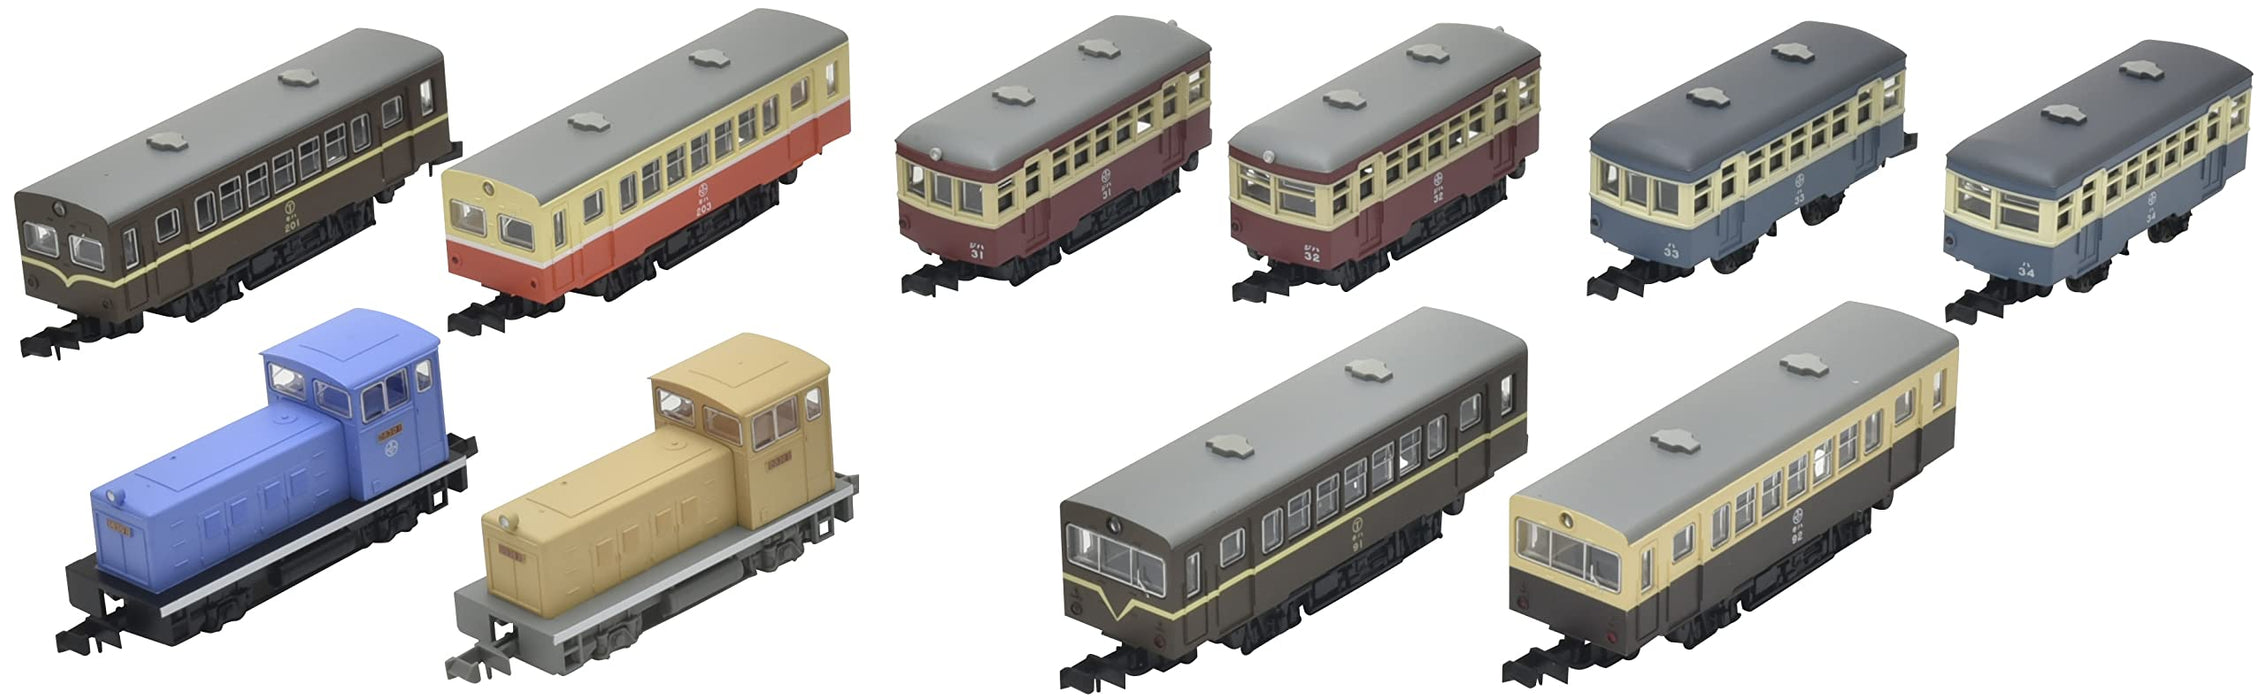 Tomytec Japan Railway Collection Vol.2 10 Box Diorama 319962